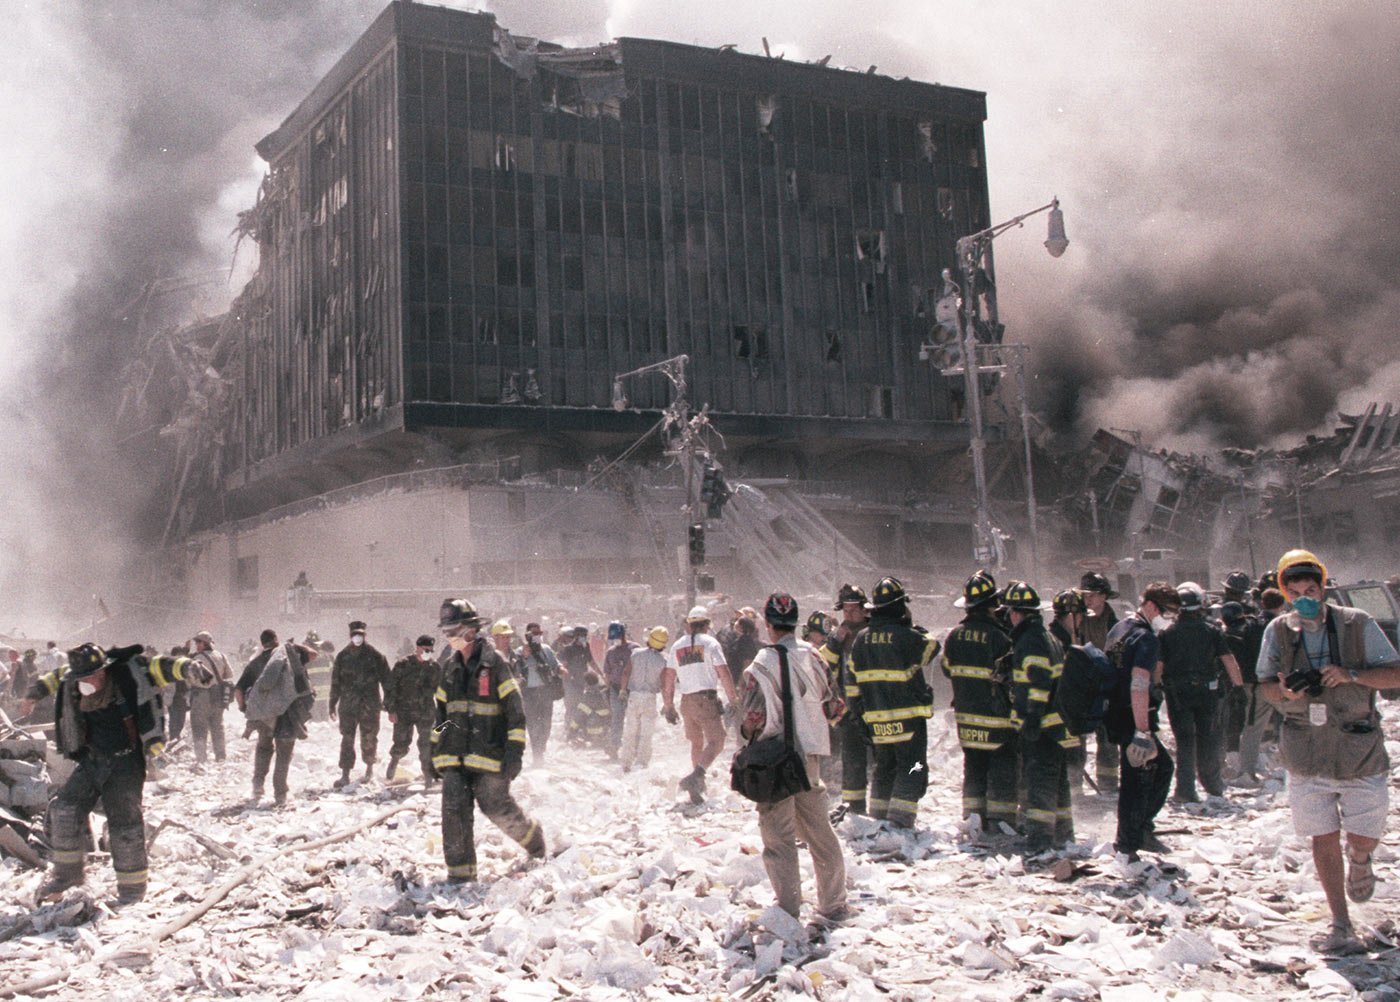 world trade center after 911